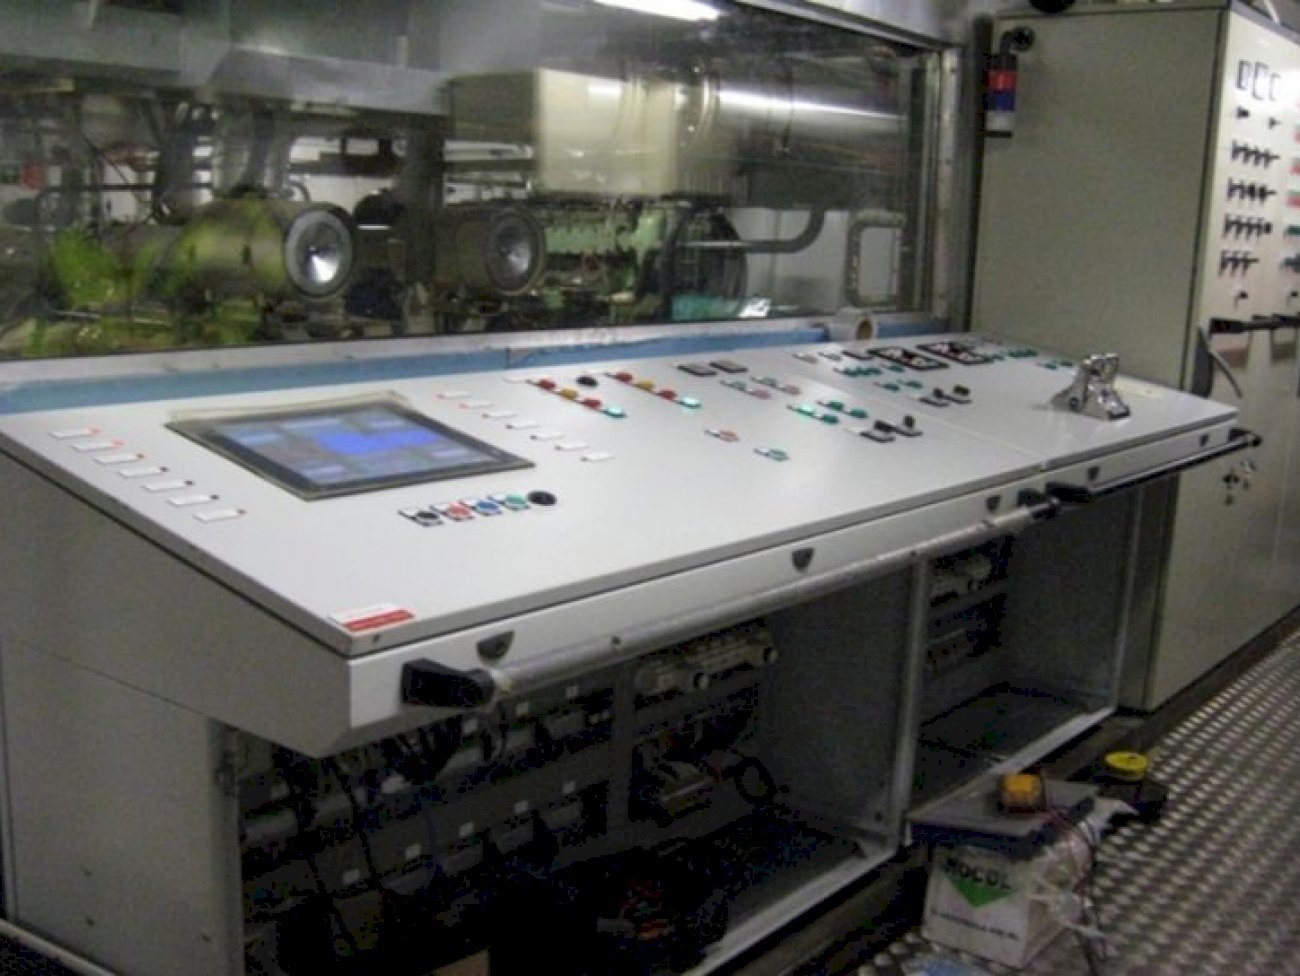 Machinery room control panel